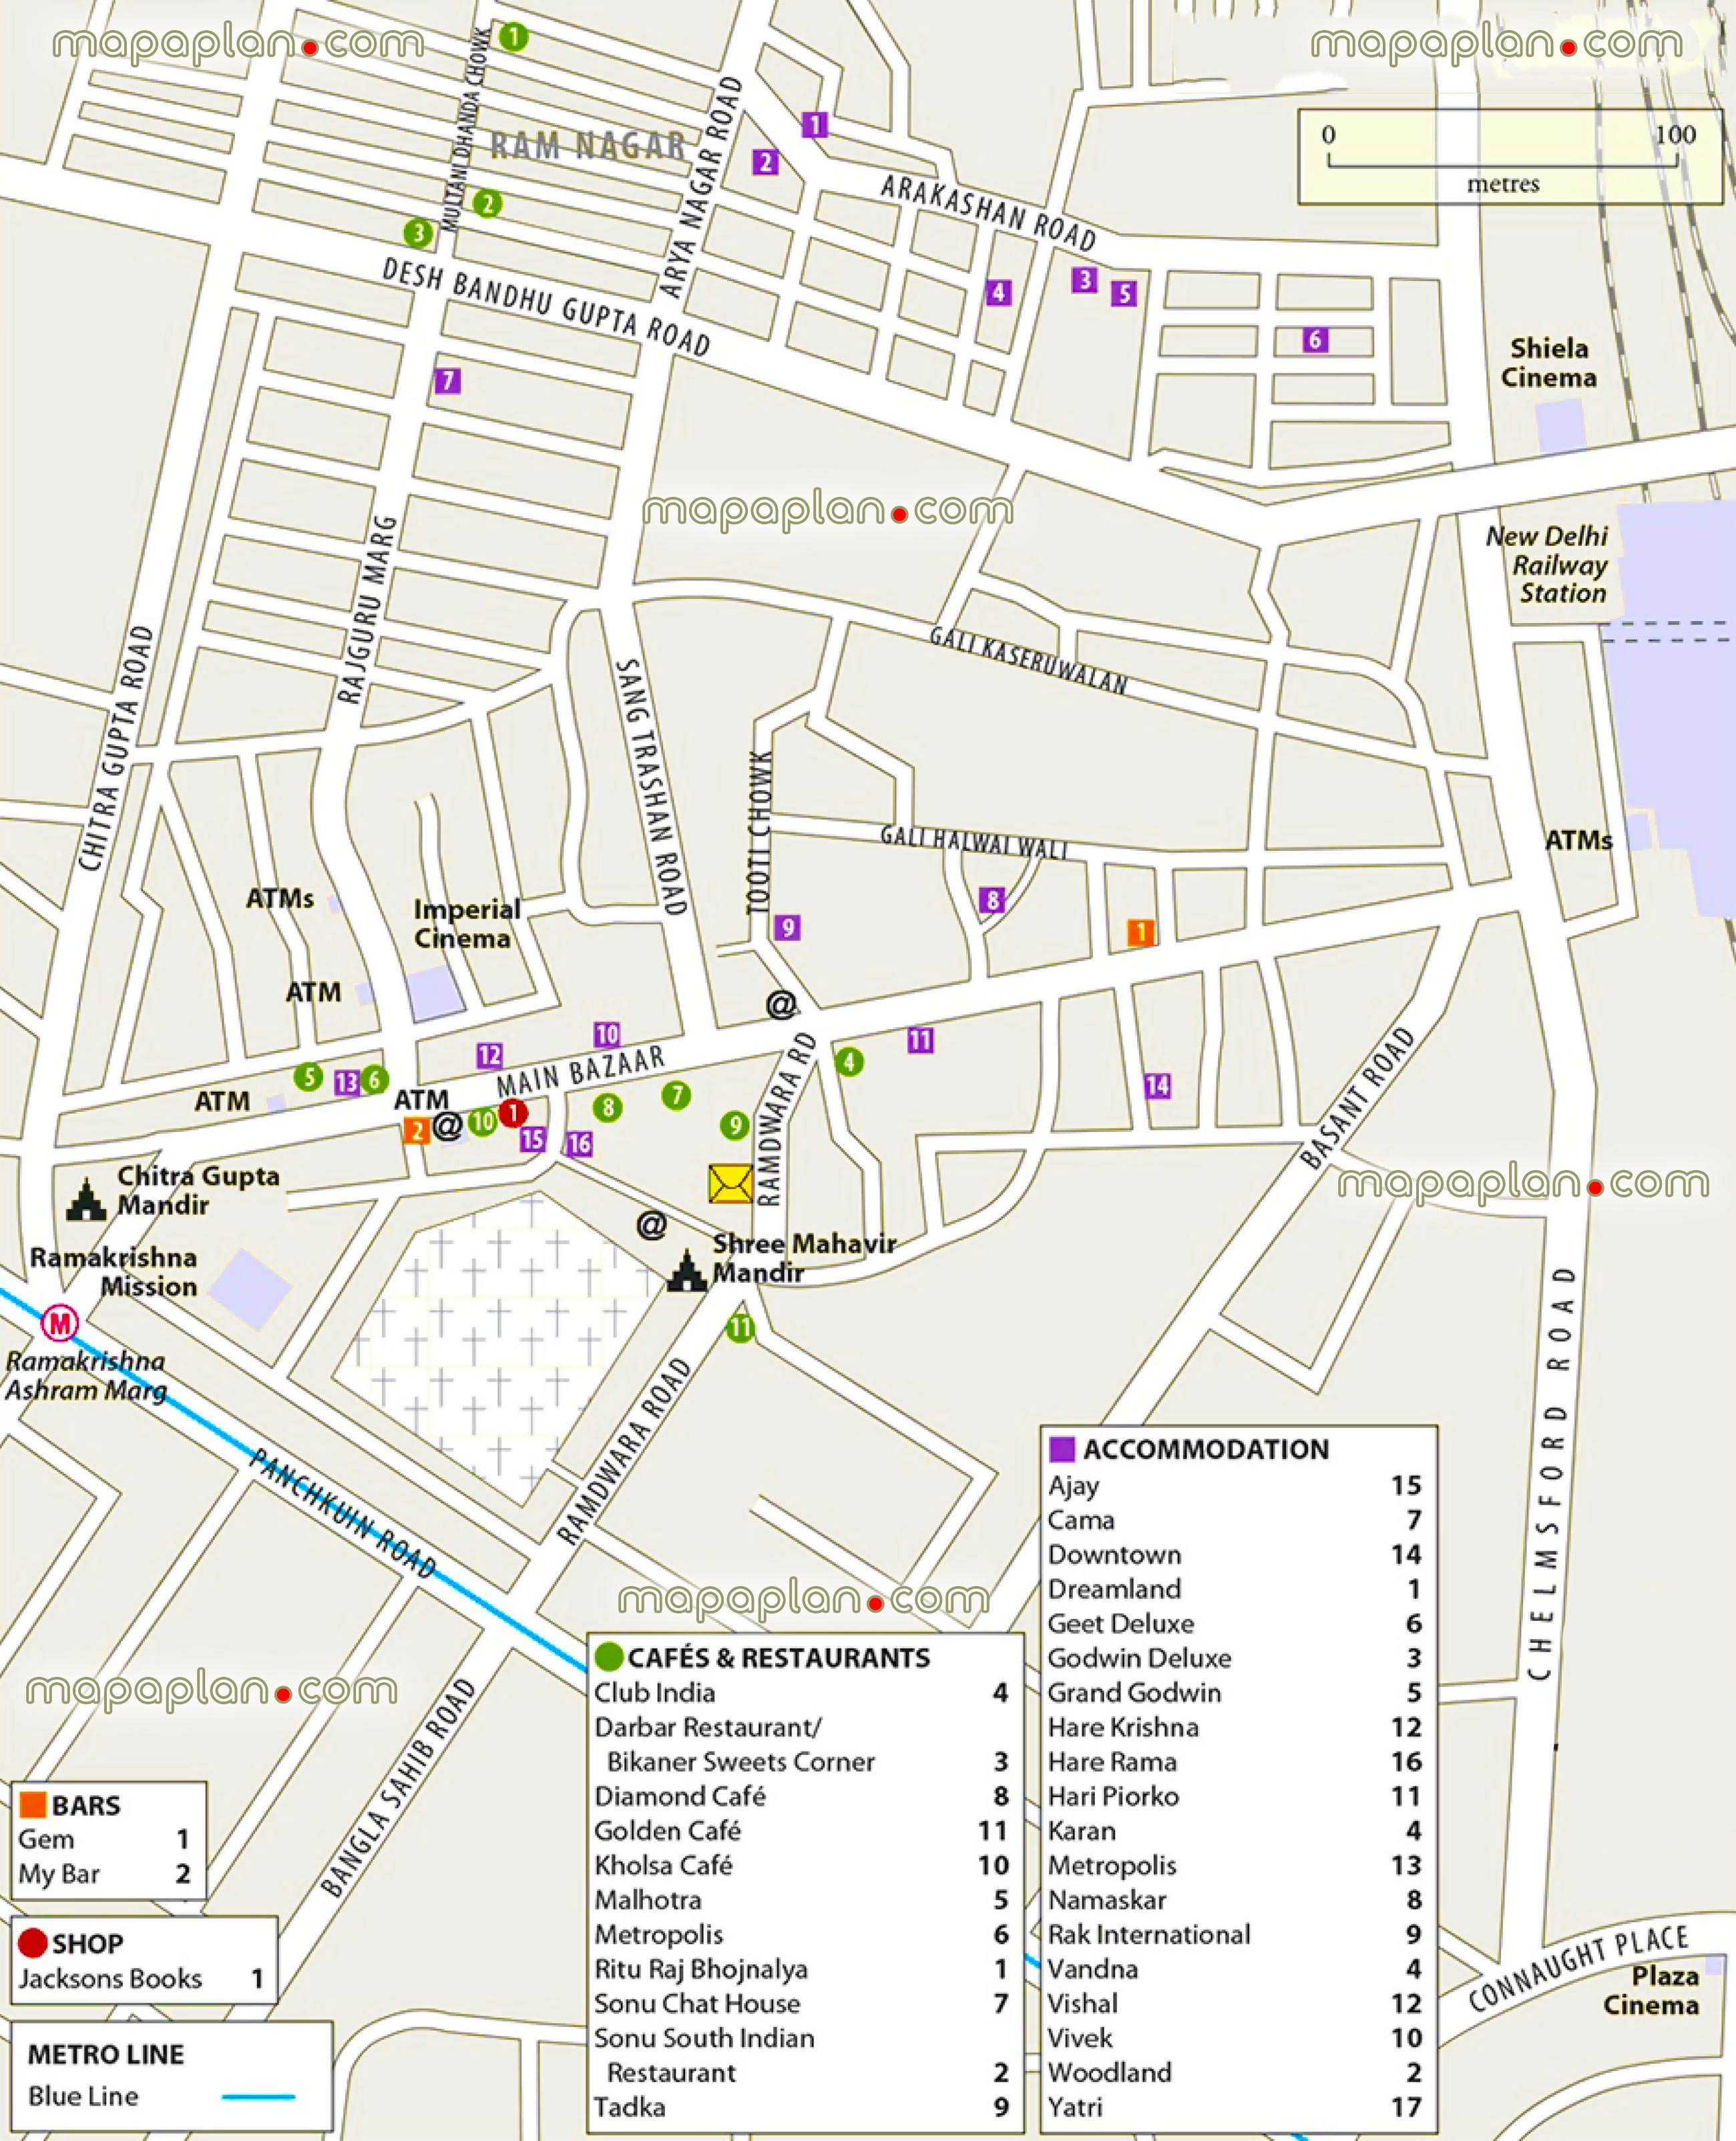 paharganj visitors driving guide new delhi railway station urban navigation directionss Delhi Top tourist attractions map